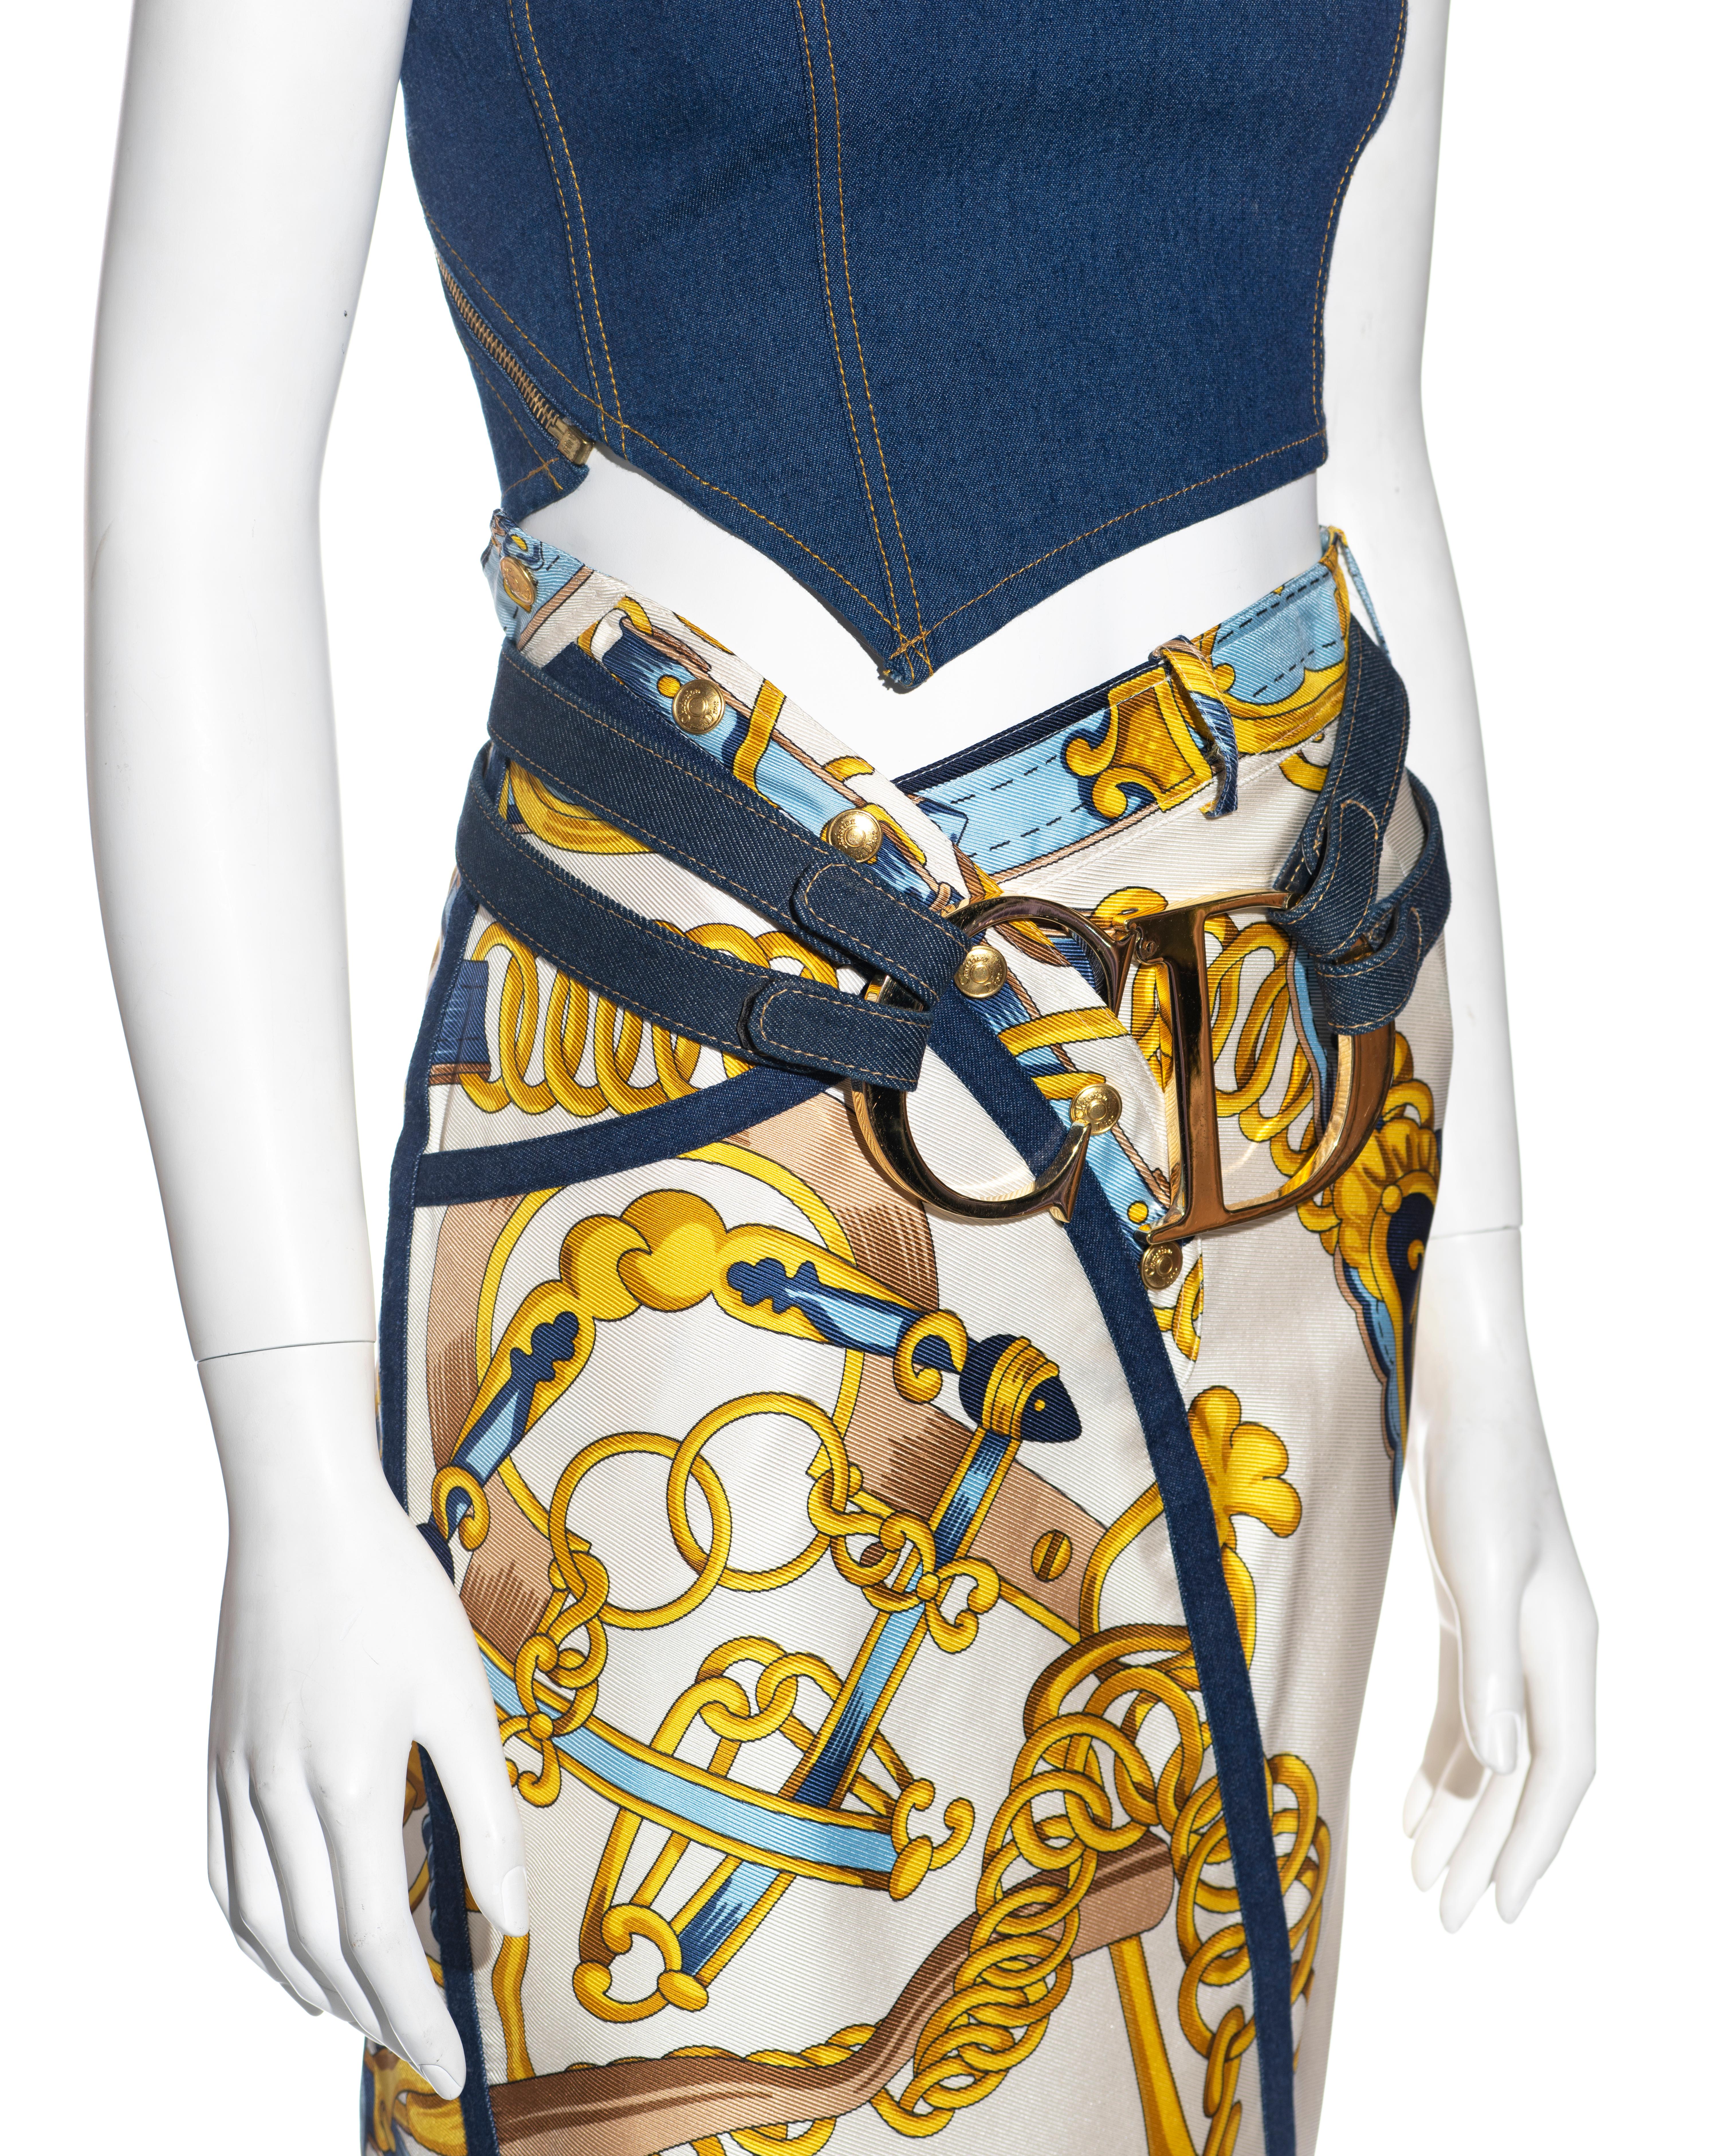 Women's Christian Dior by John Galliano skirt, top and belt ensemble, ss 2000